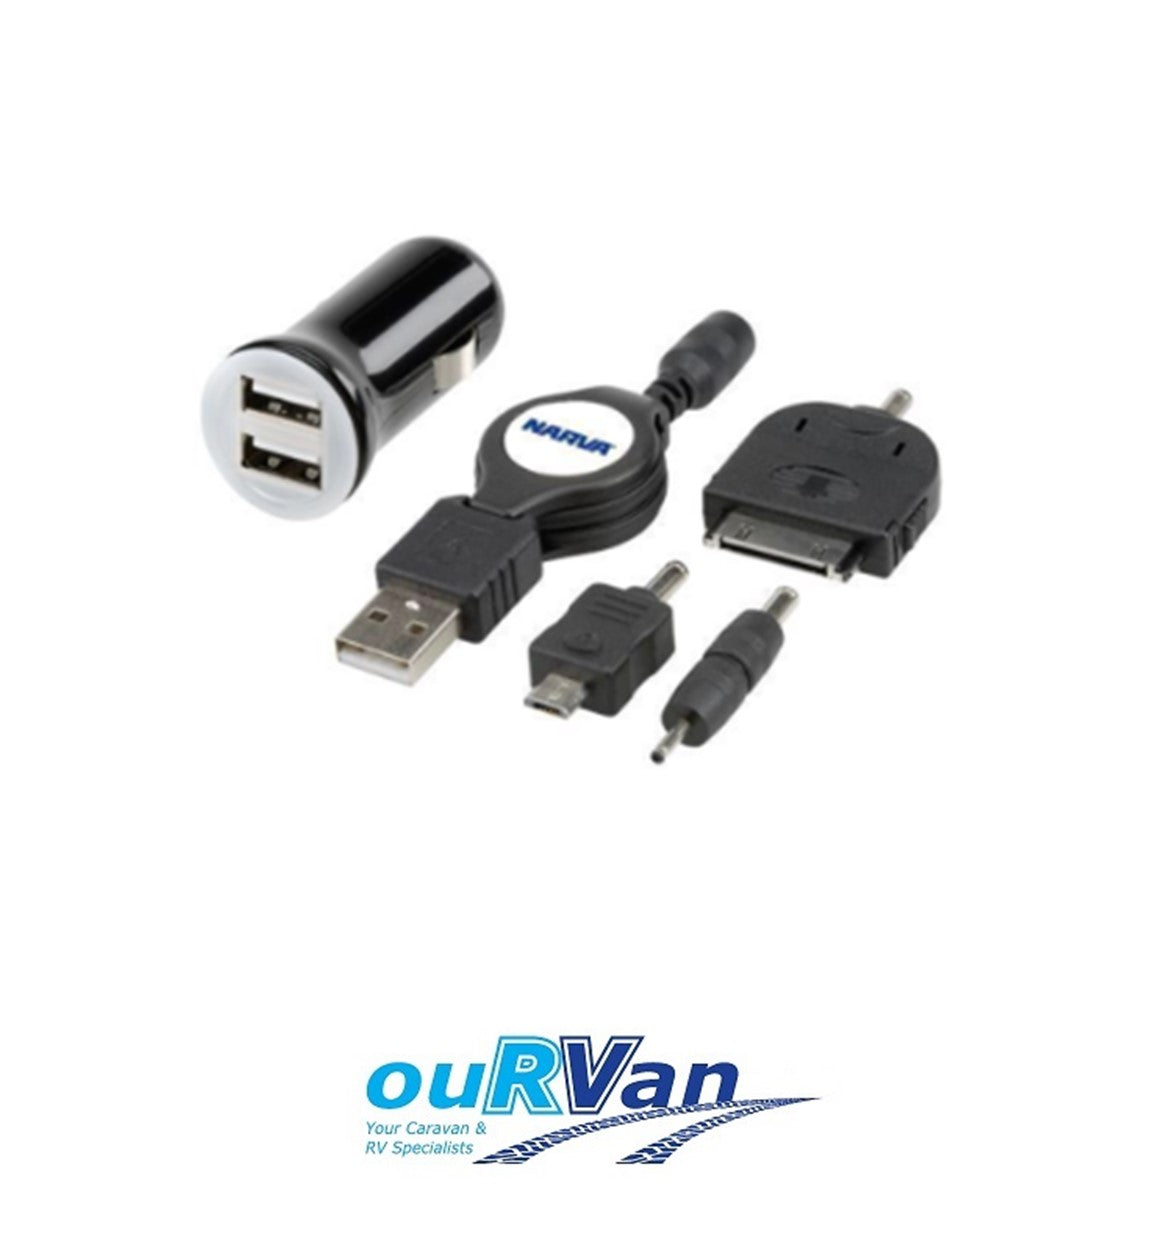 Narva Twin USB Power Adaptor Kit 12V - 24V Caravan Accessory